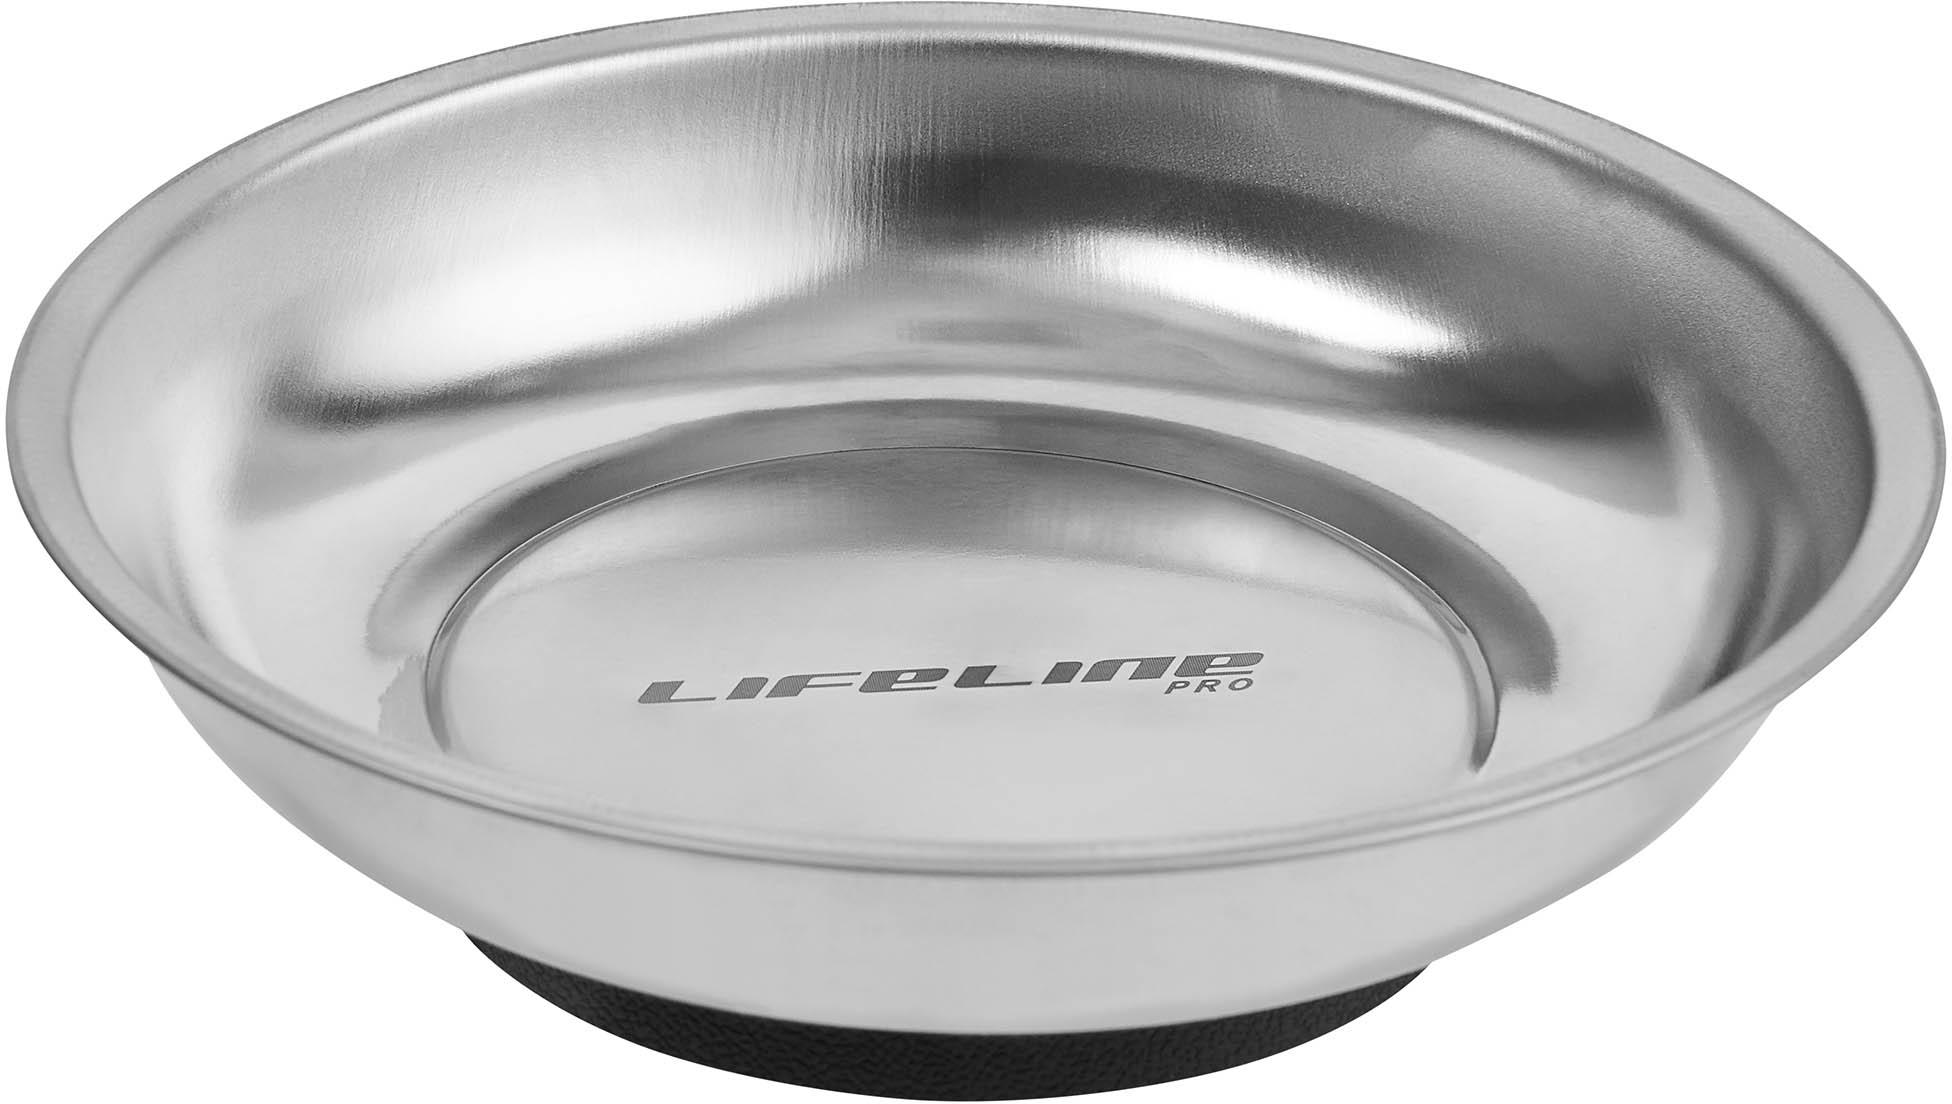 Lifeline Pro Magnetic Tool Bowl  Silver